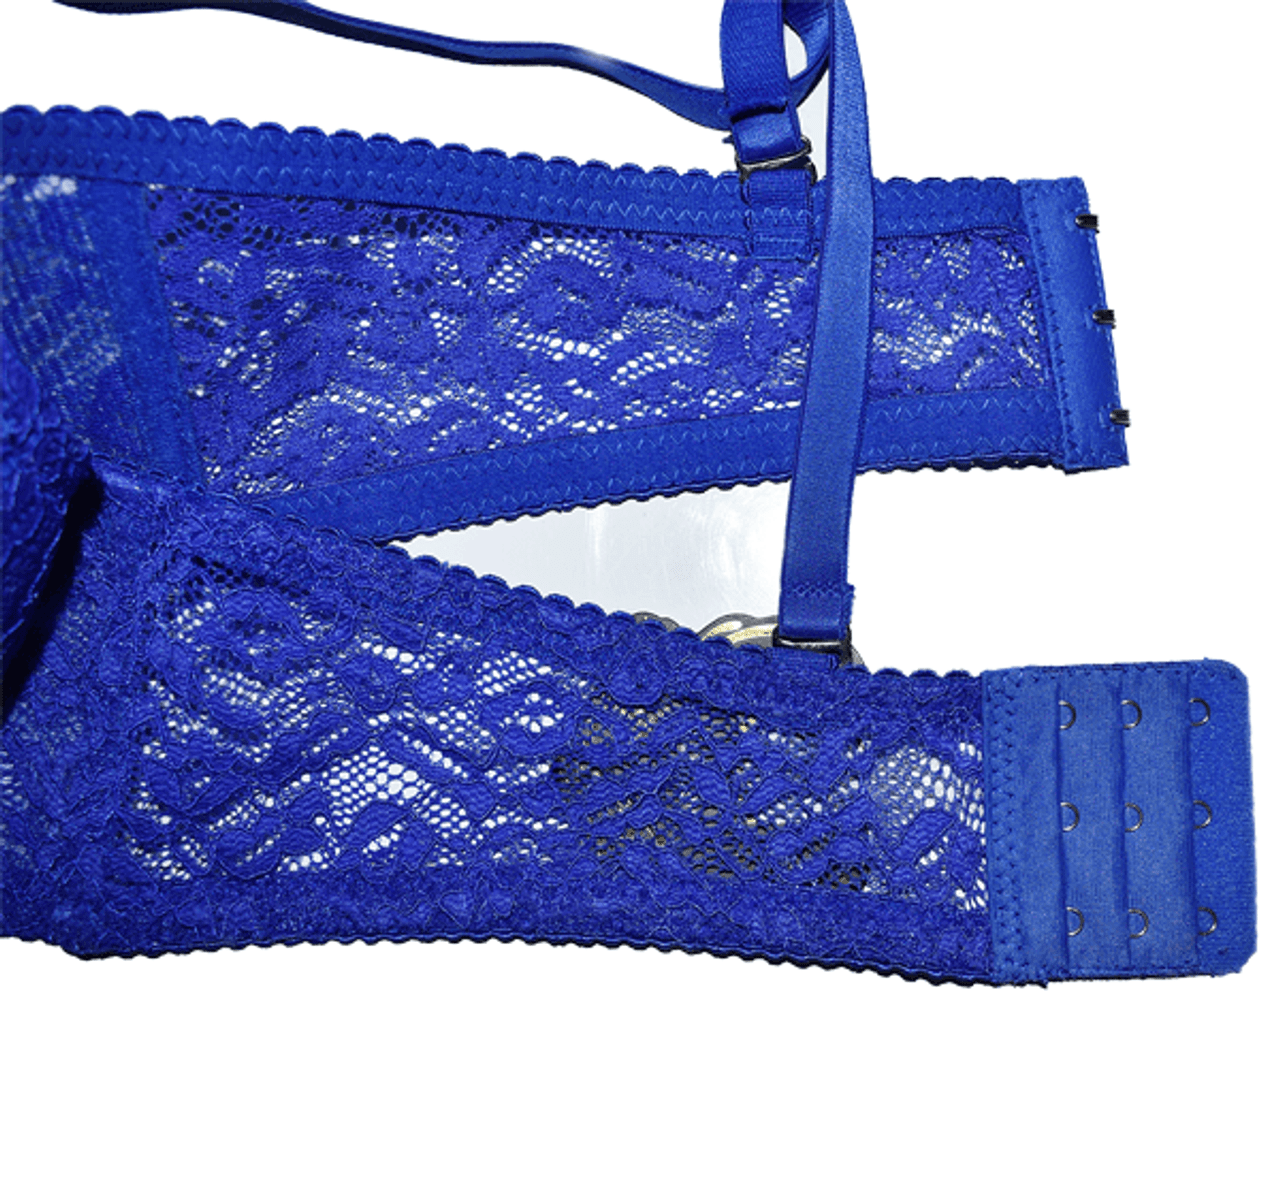 Buy Online Lace Lingerie Push Up Padded Bra Panty Set for Women